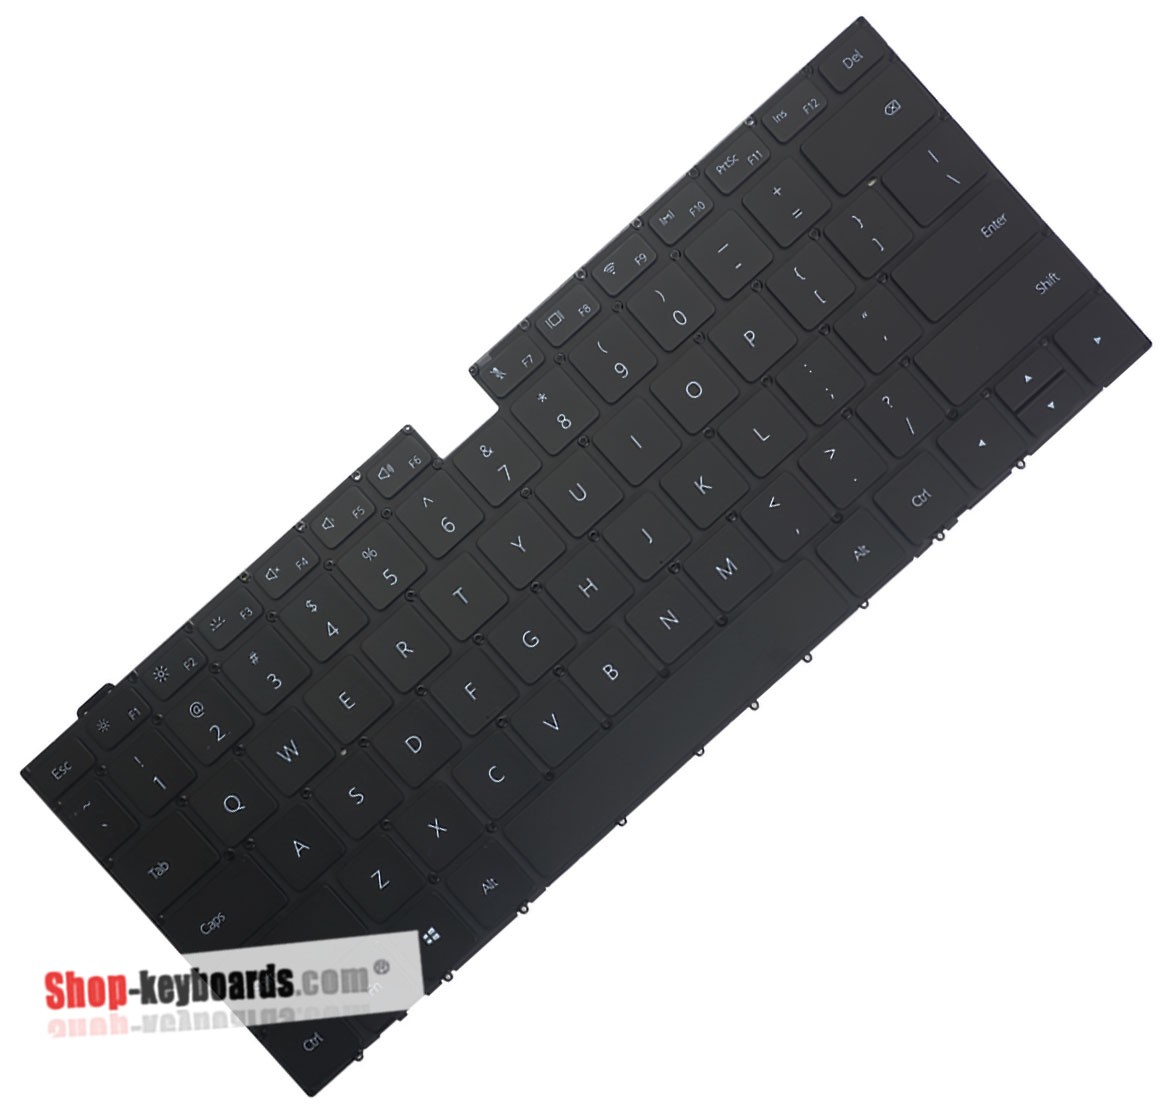 HUAWEI 9Z.NEXBH.000 Keyboard replacement